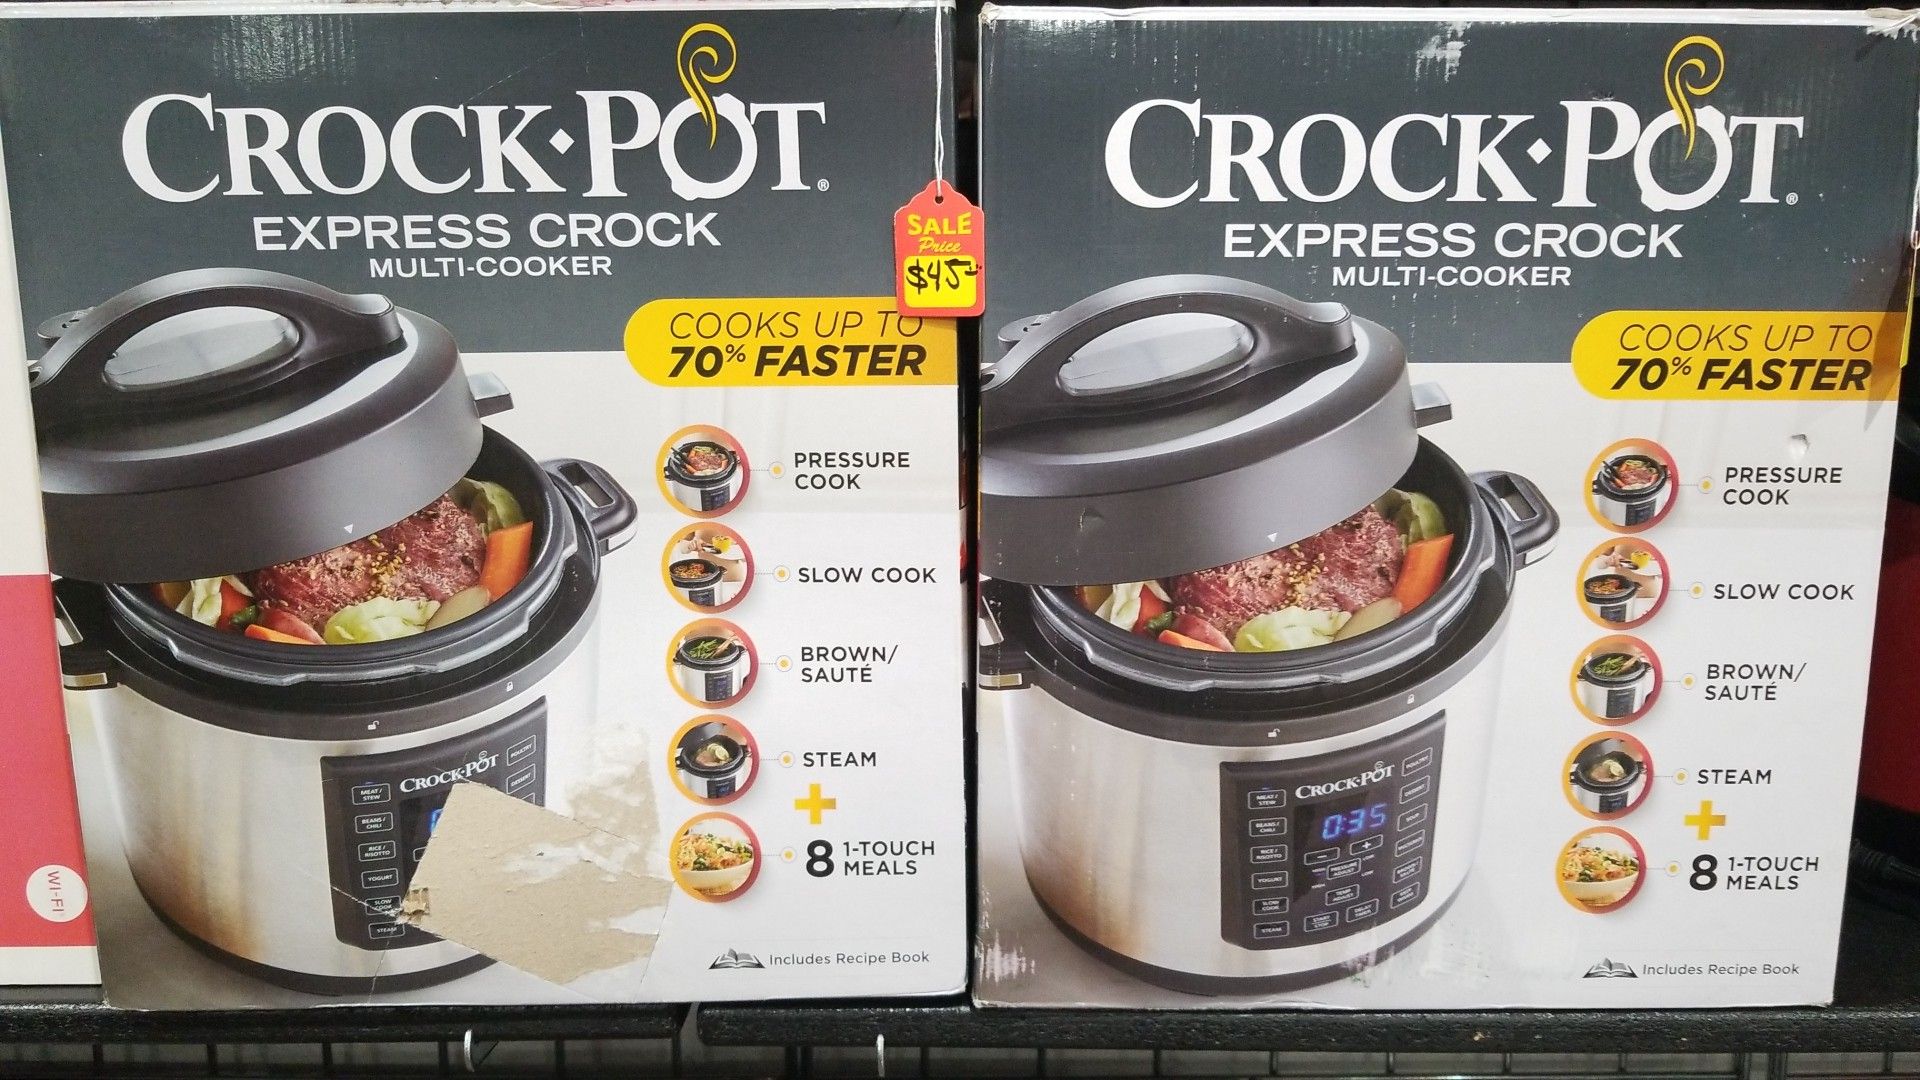 Crock pot Express crock multi-cooker